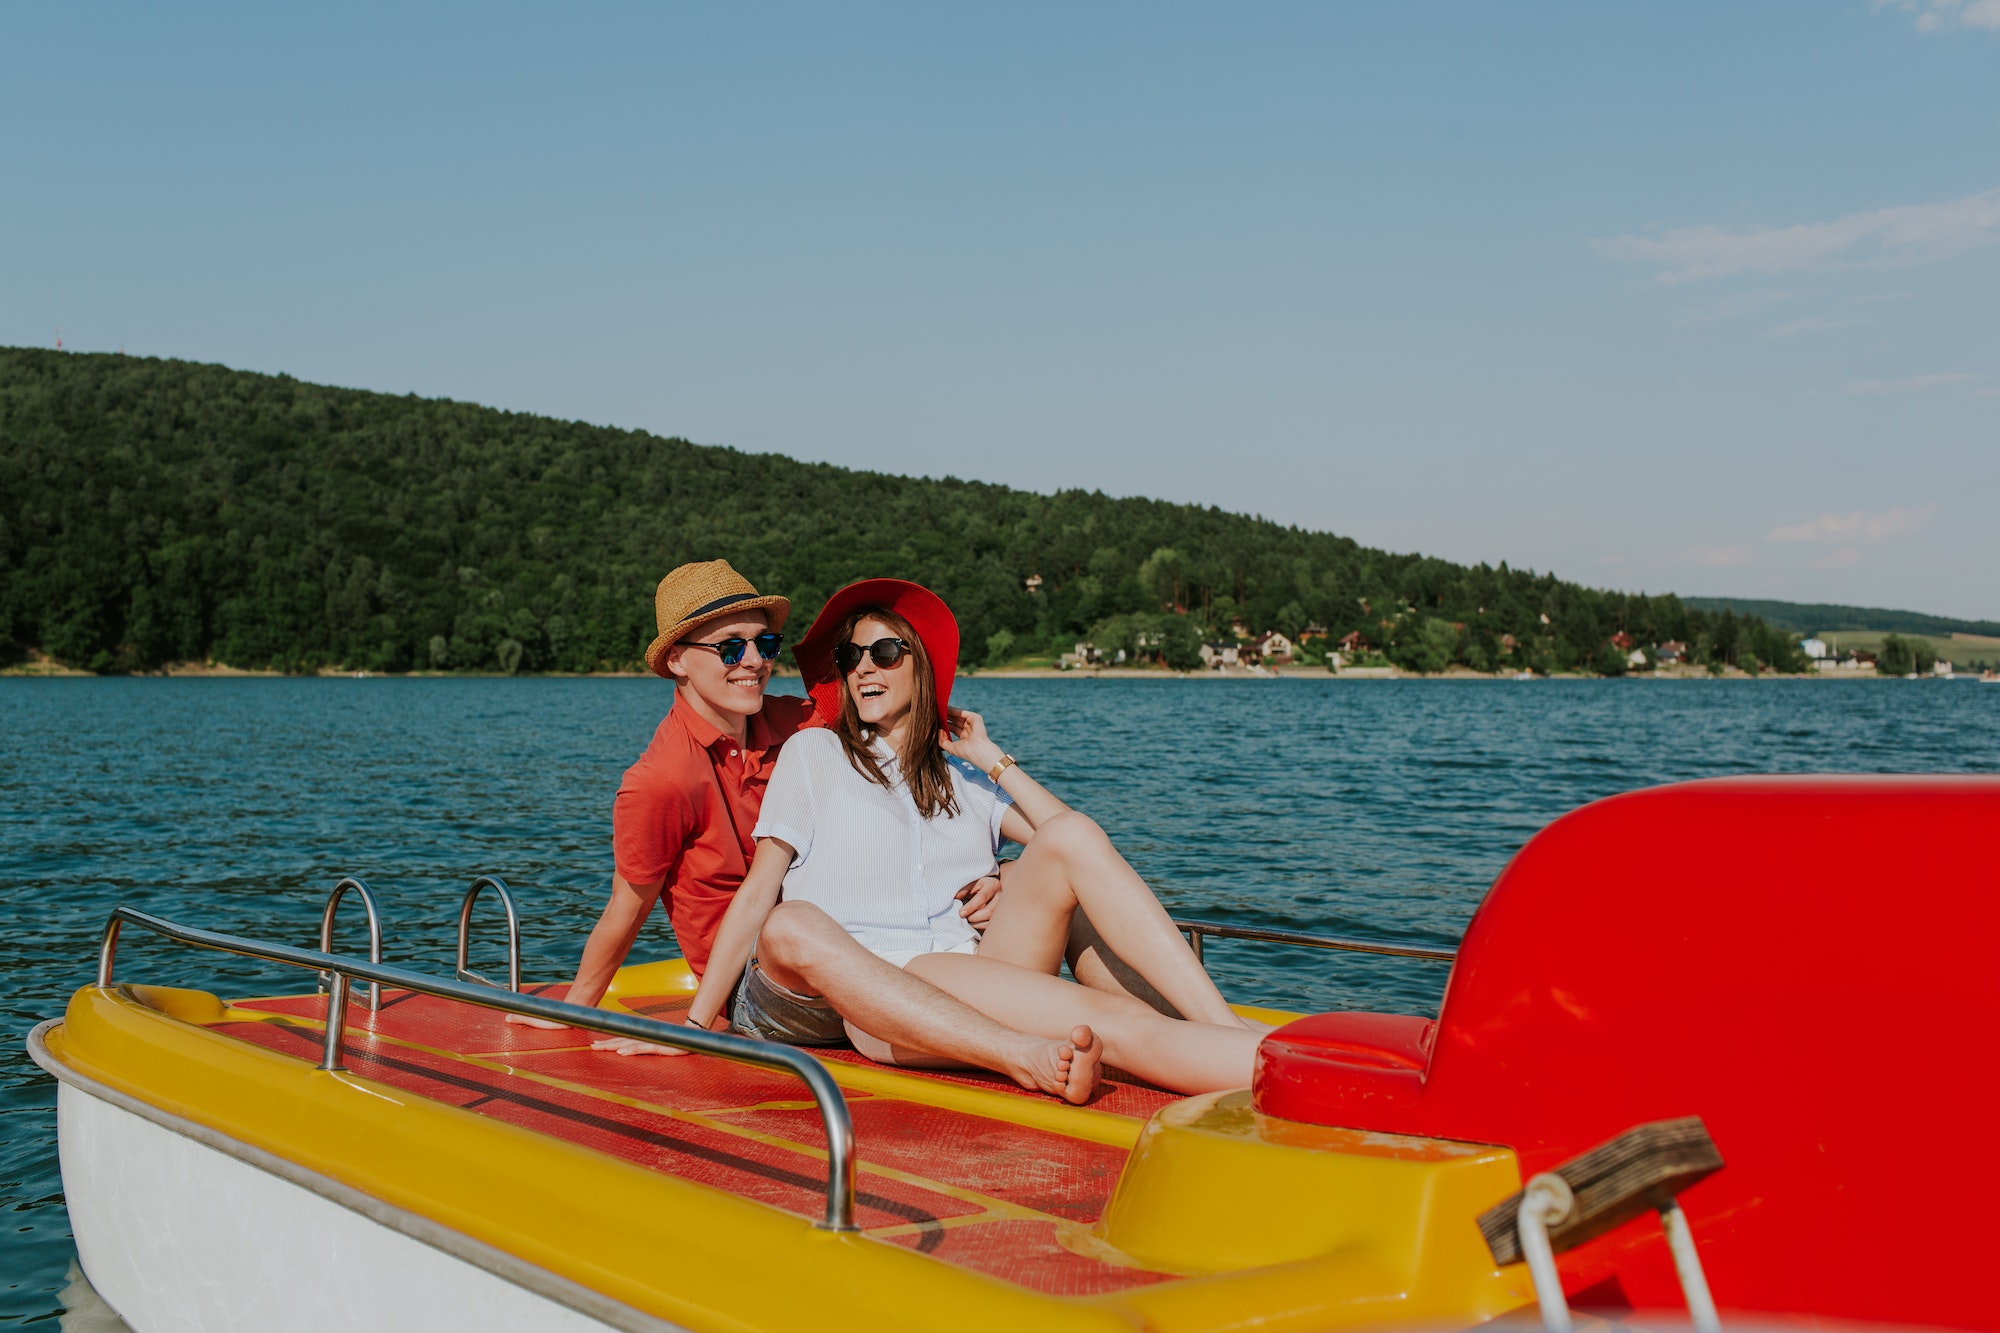 Cheerful man and woman having fun while boating.